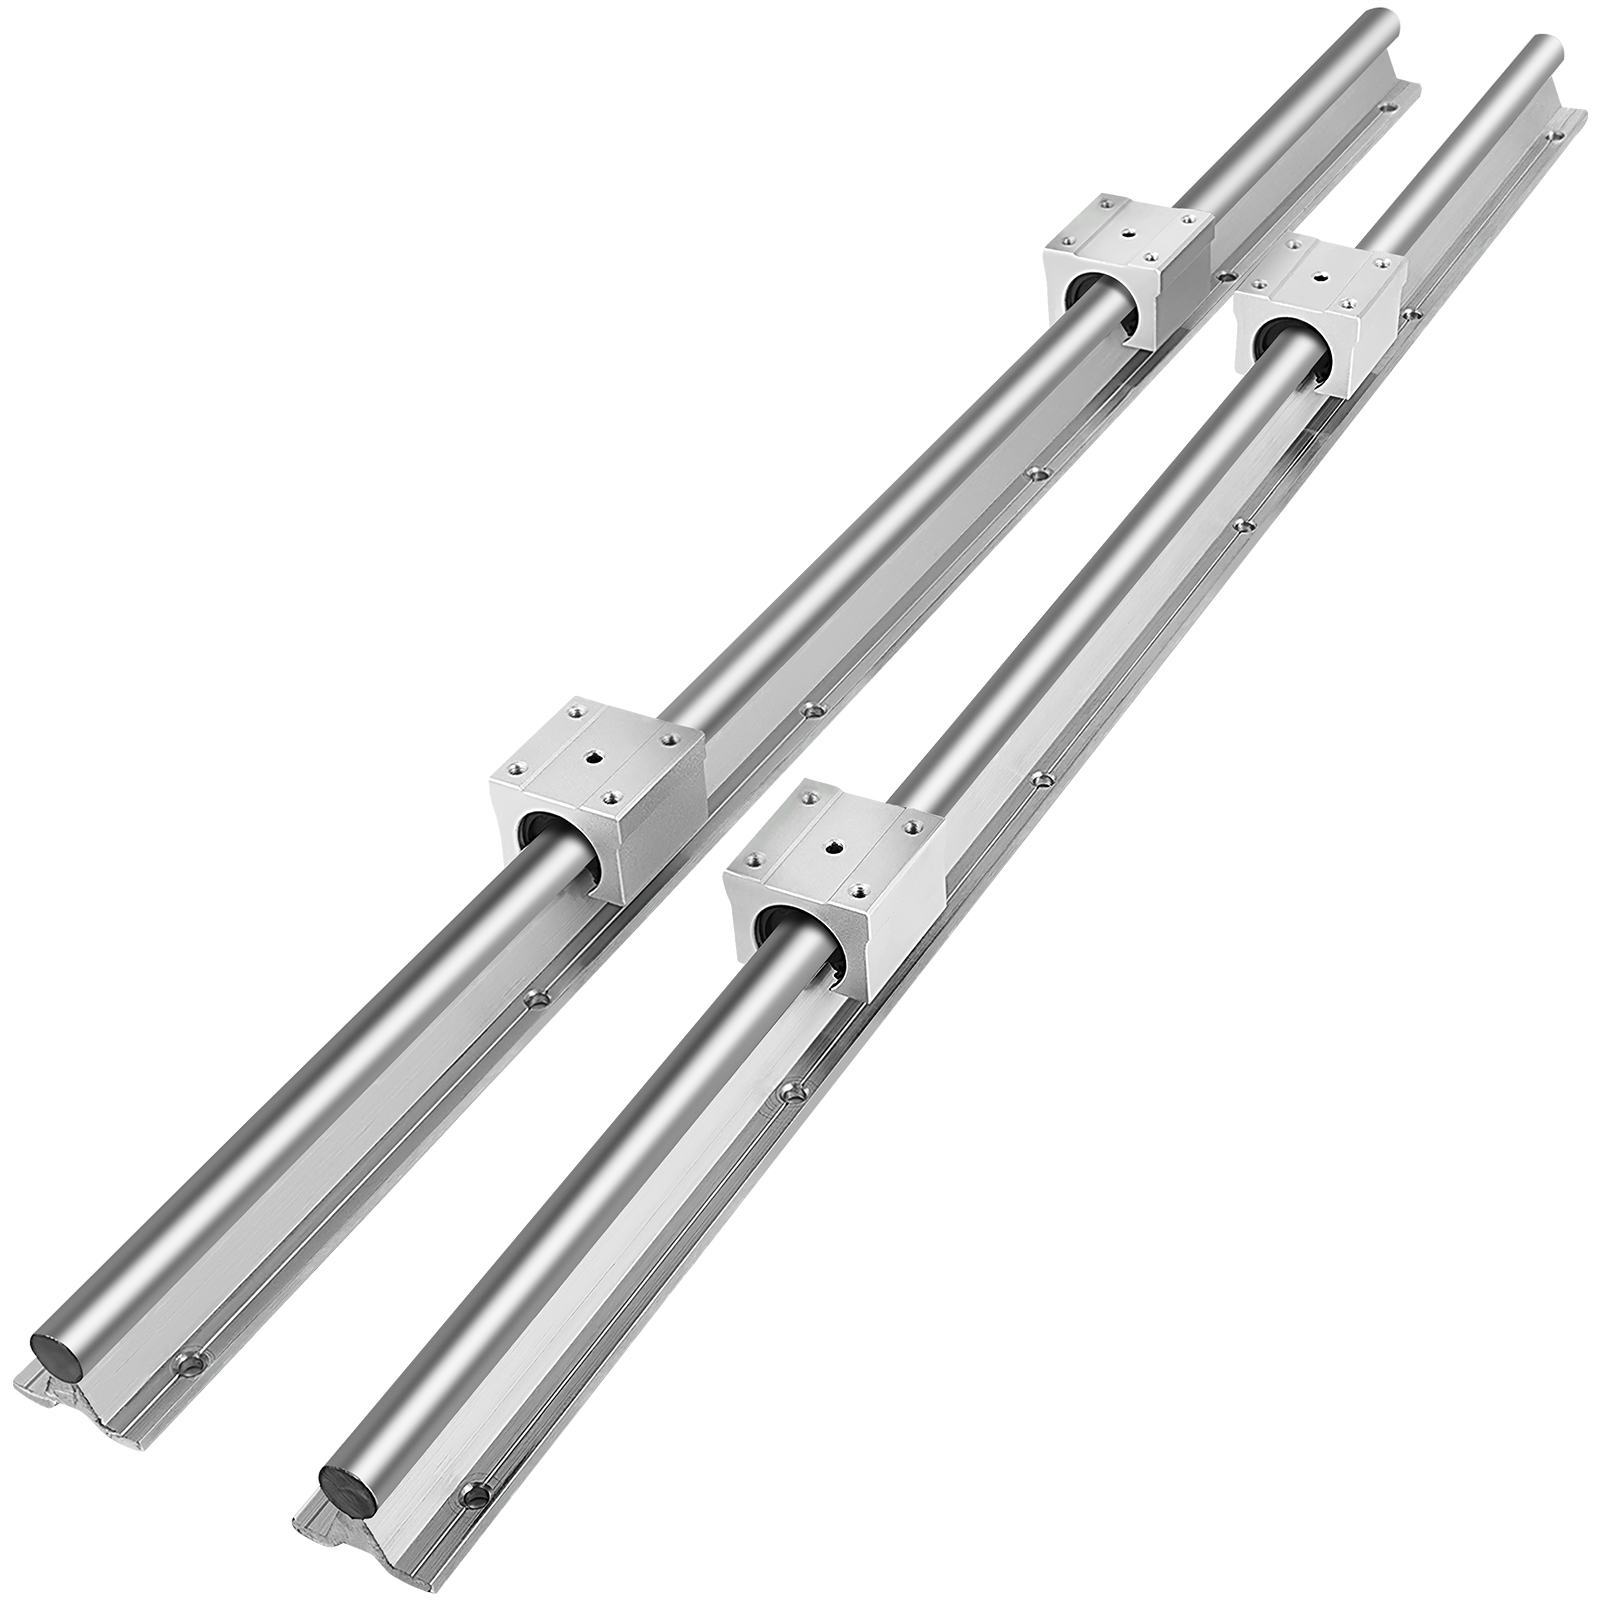 2xsbr20-800mm Linear Rail Shaft Rod +4sbr20 Block Bearing Chrome-plated Mills от Vevor Many GEOs